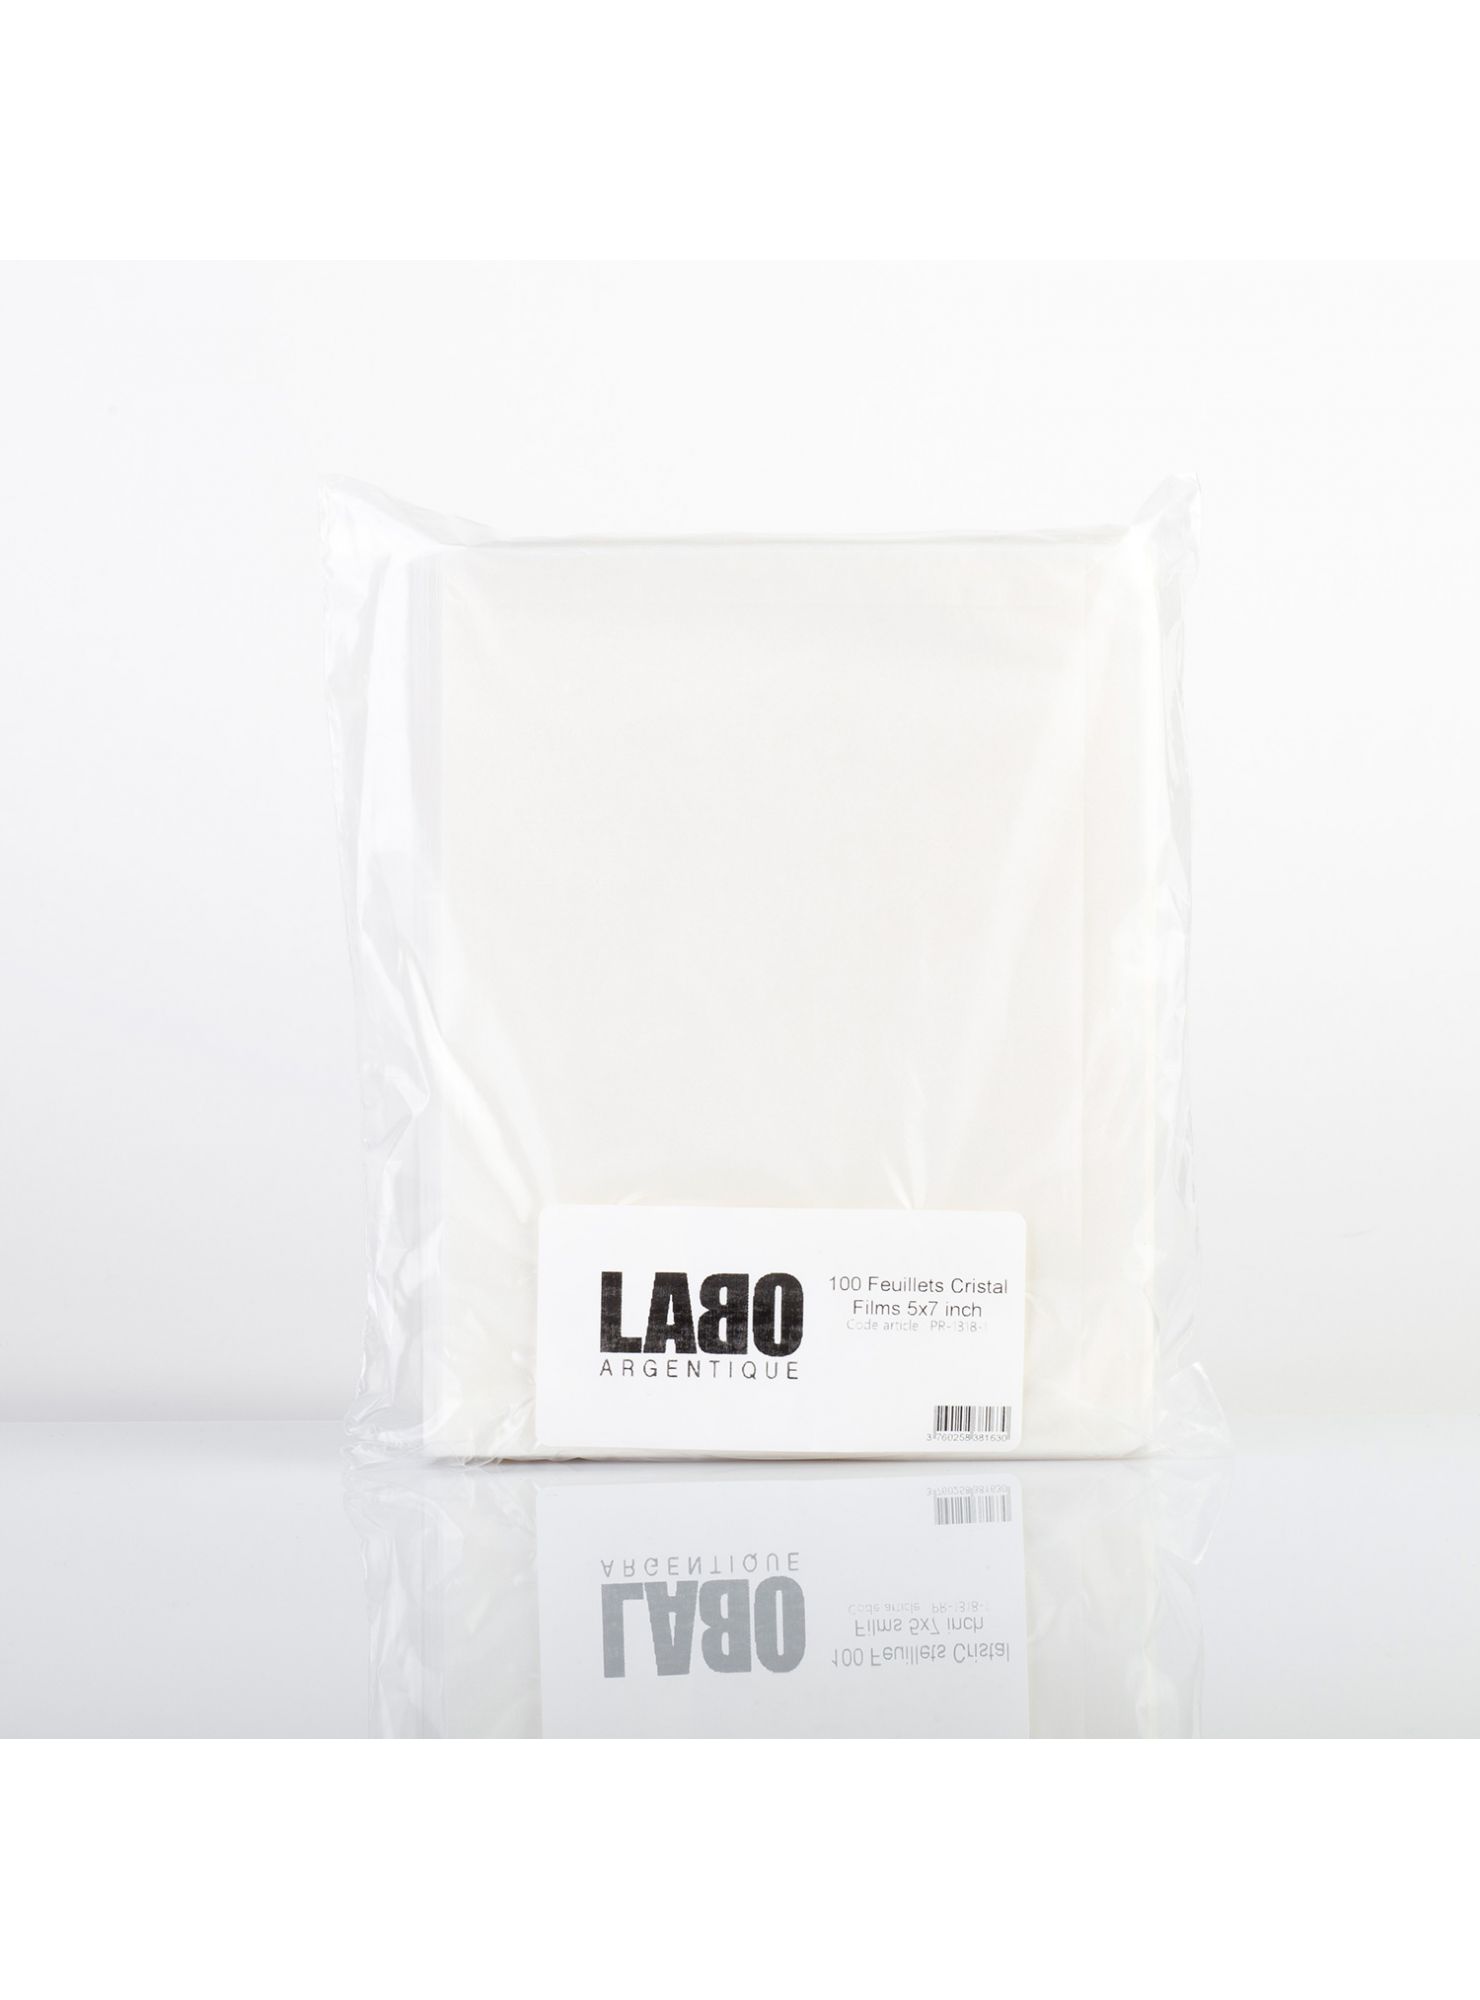 LABO-ARGENTIQUE Pochettes Cristal 5 x 7 inch ou 13 x 18 cm / 100 poch